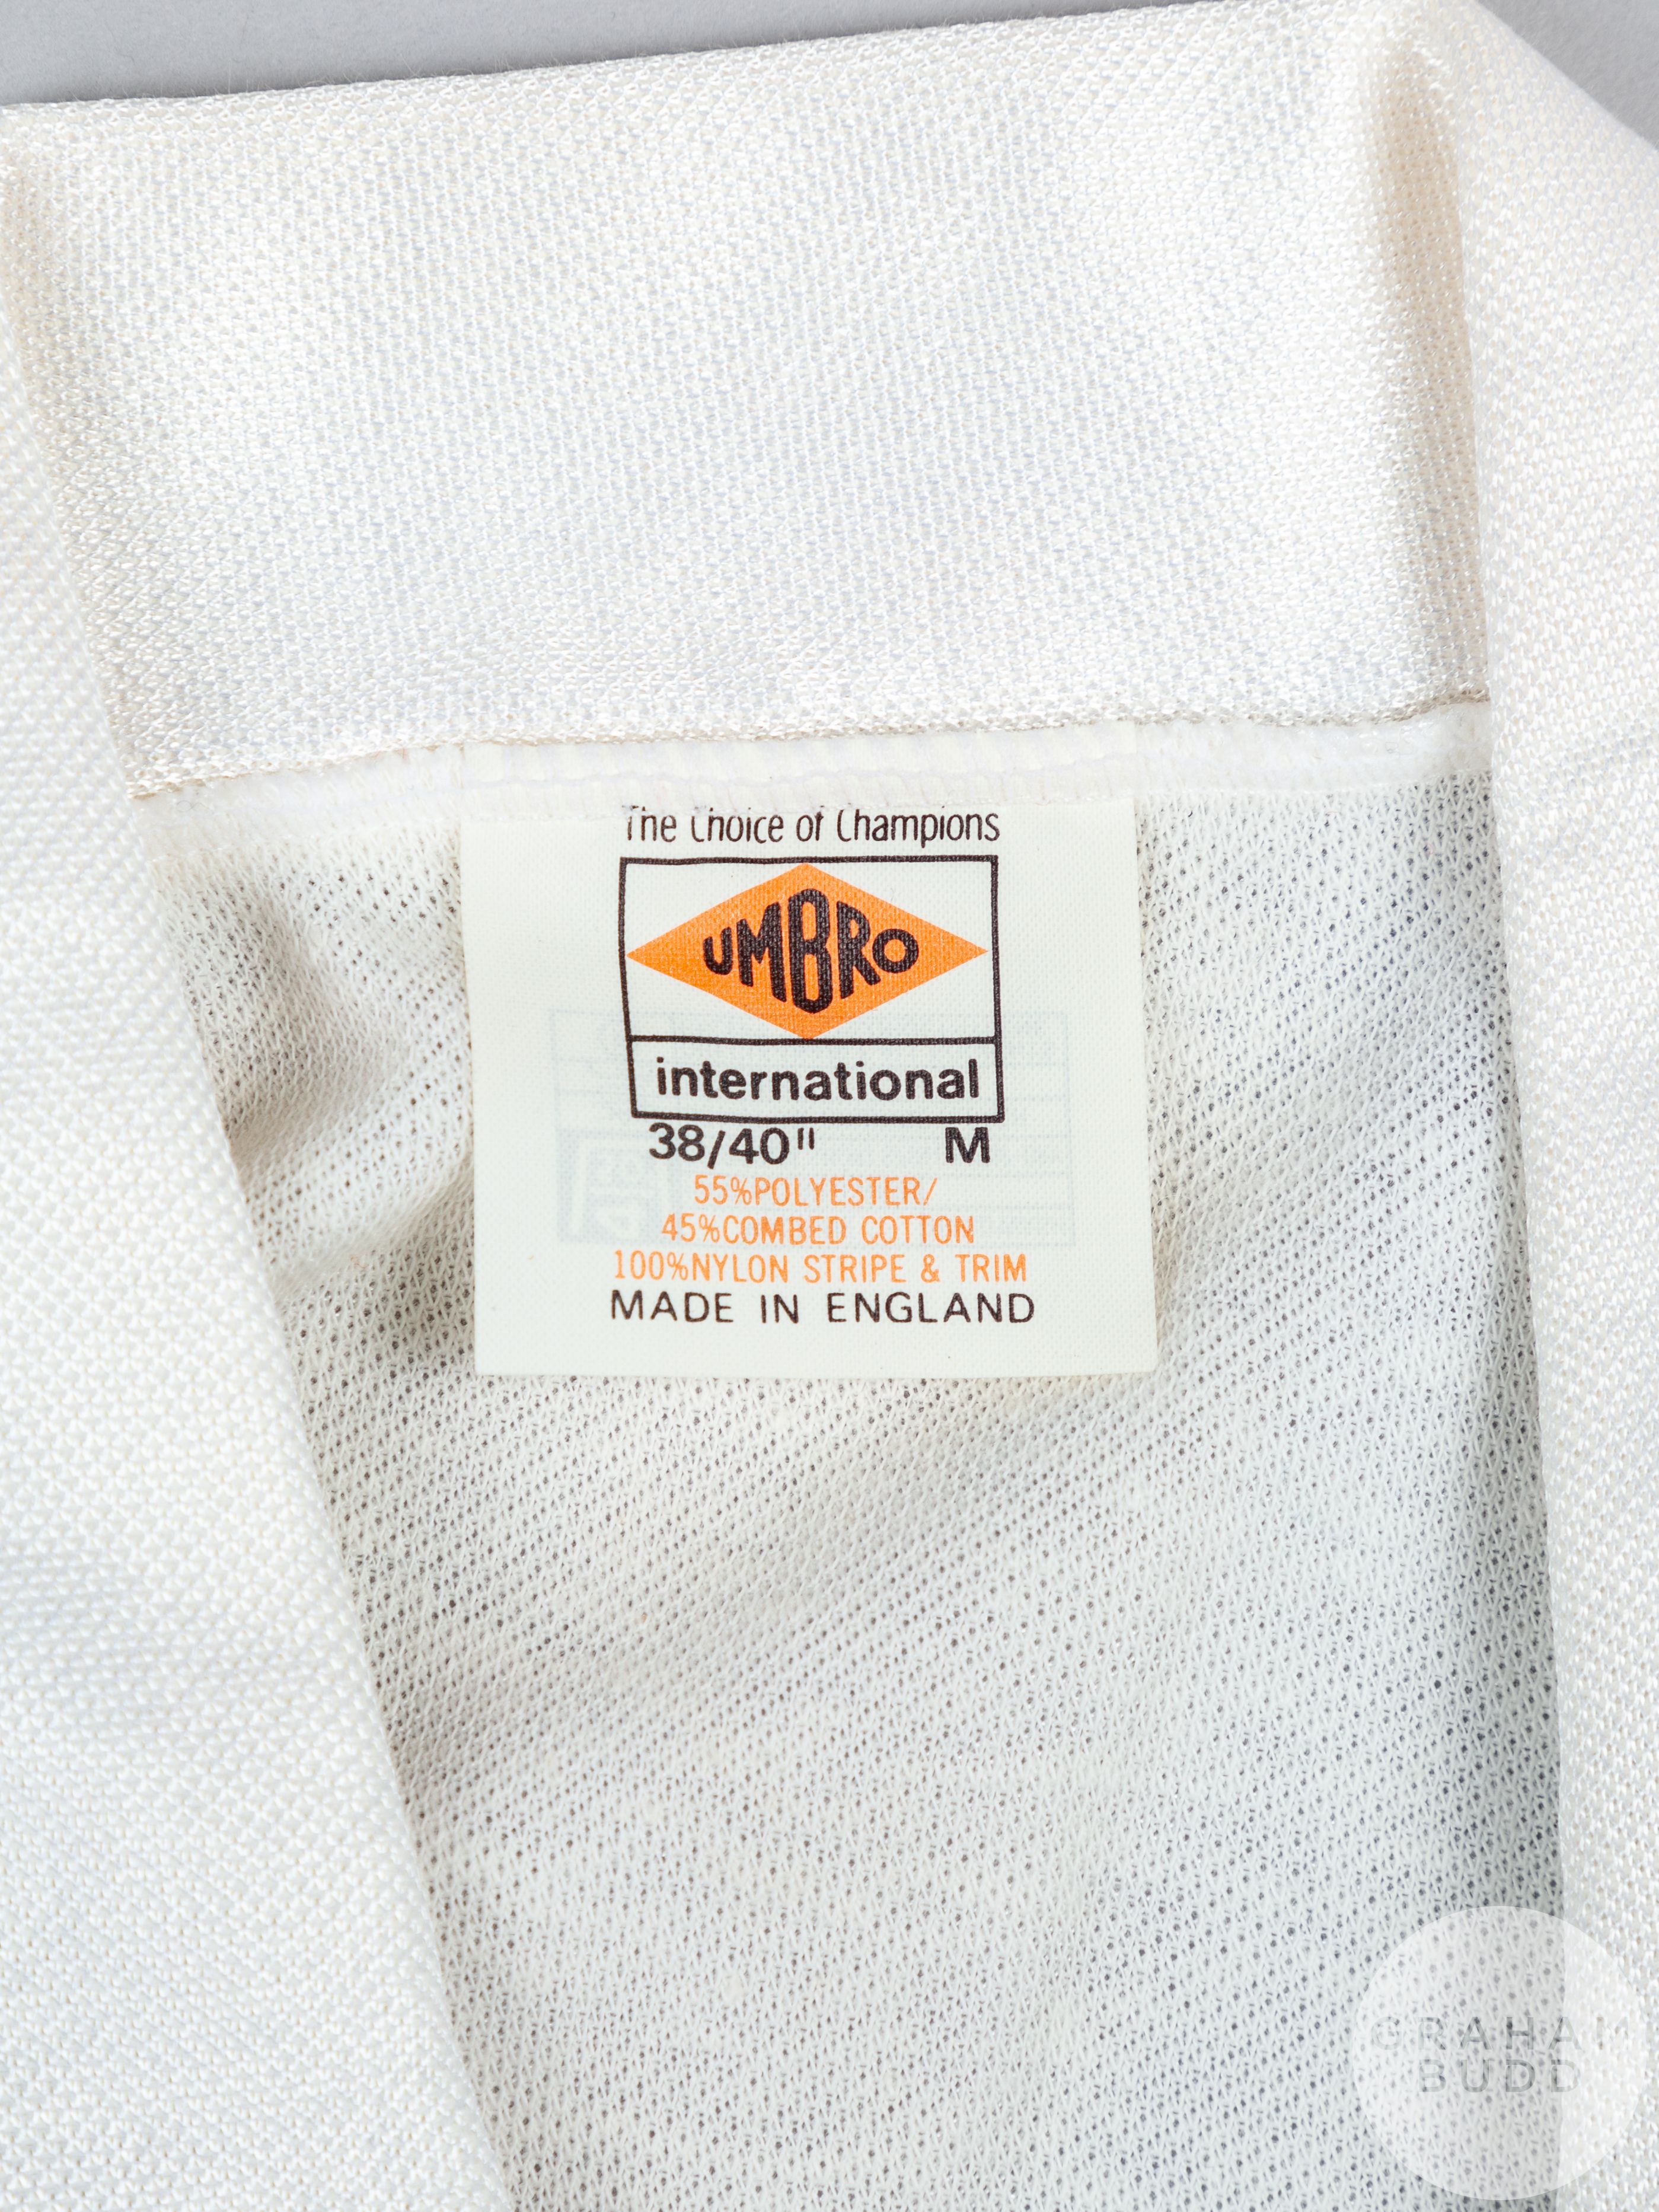 Rare white and blue Scotland International short-sleeved shirt - Image 4 of 5